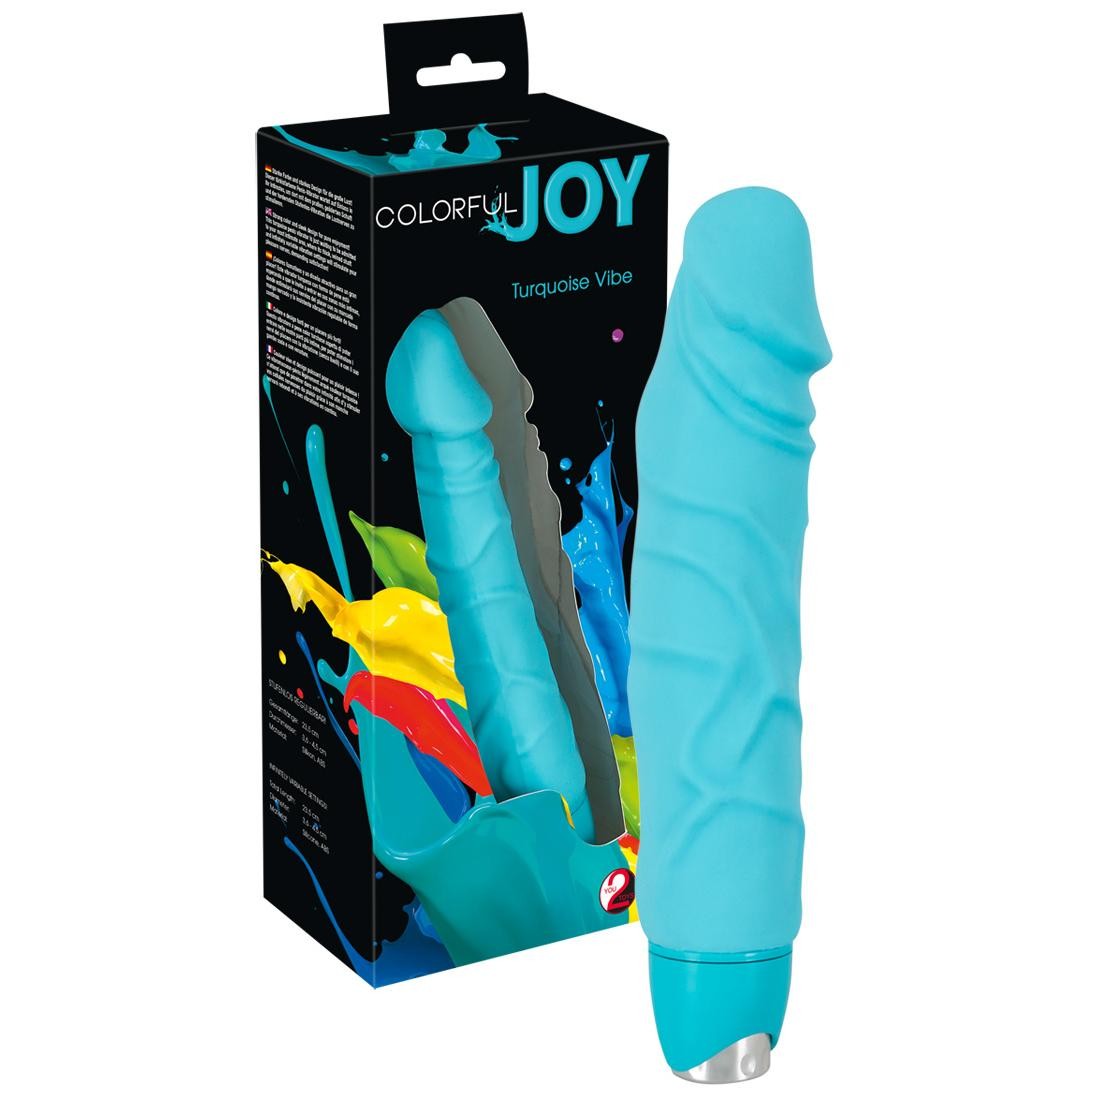  You2Toys  -  Colorful  Joy  Turquoise  Vibe  -  Vibrator 